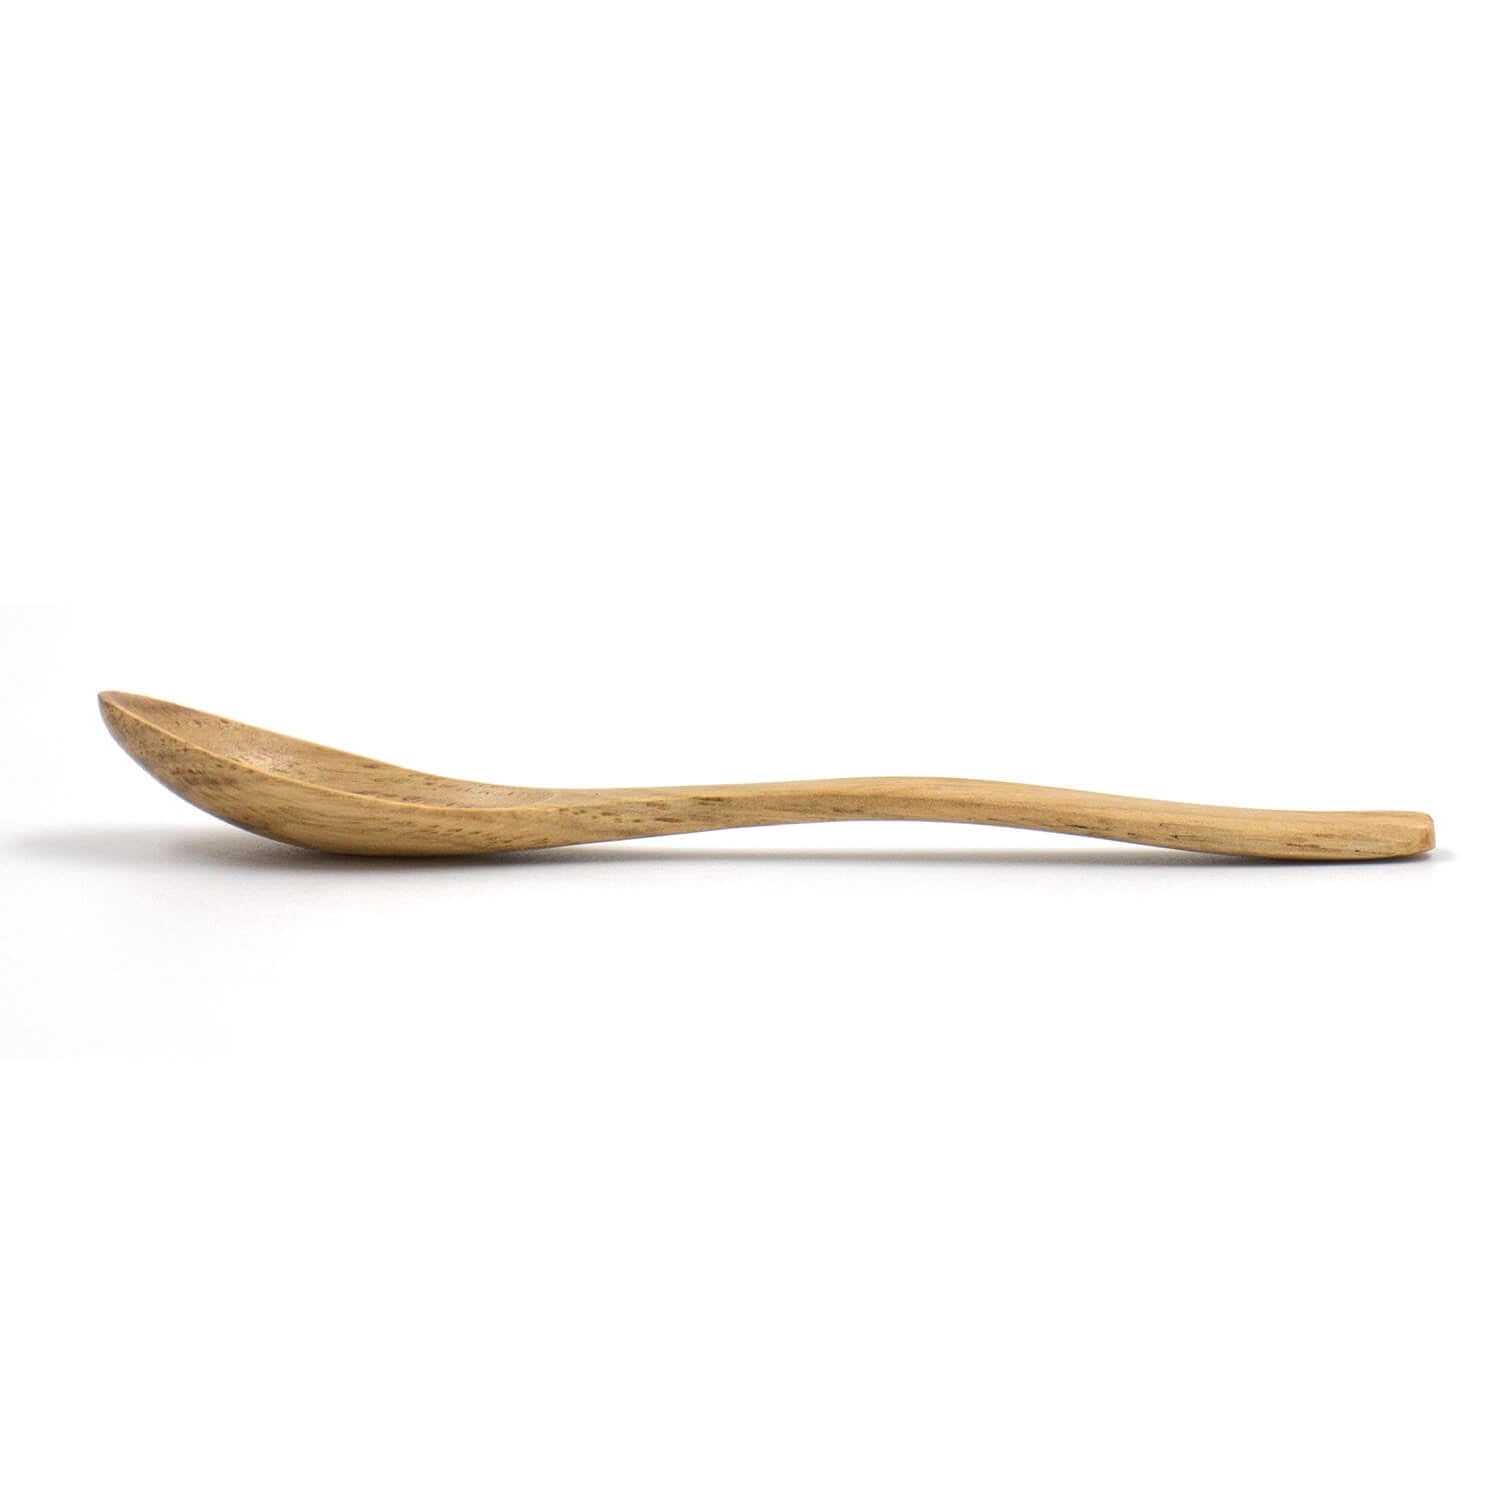 Chestnut wood spoon 120mm